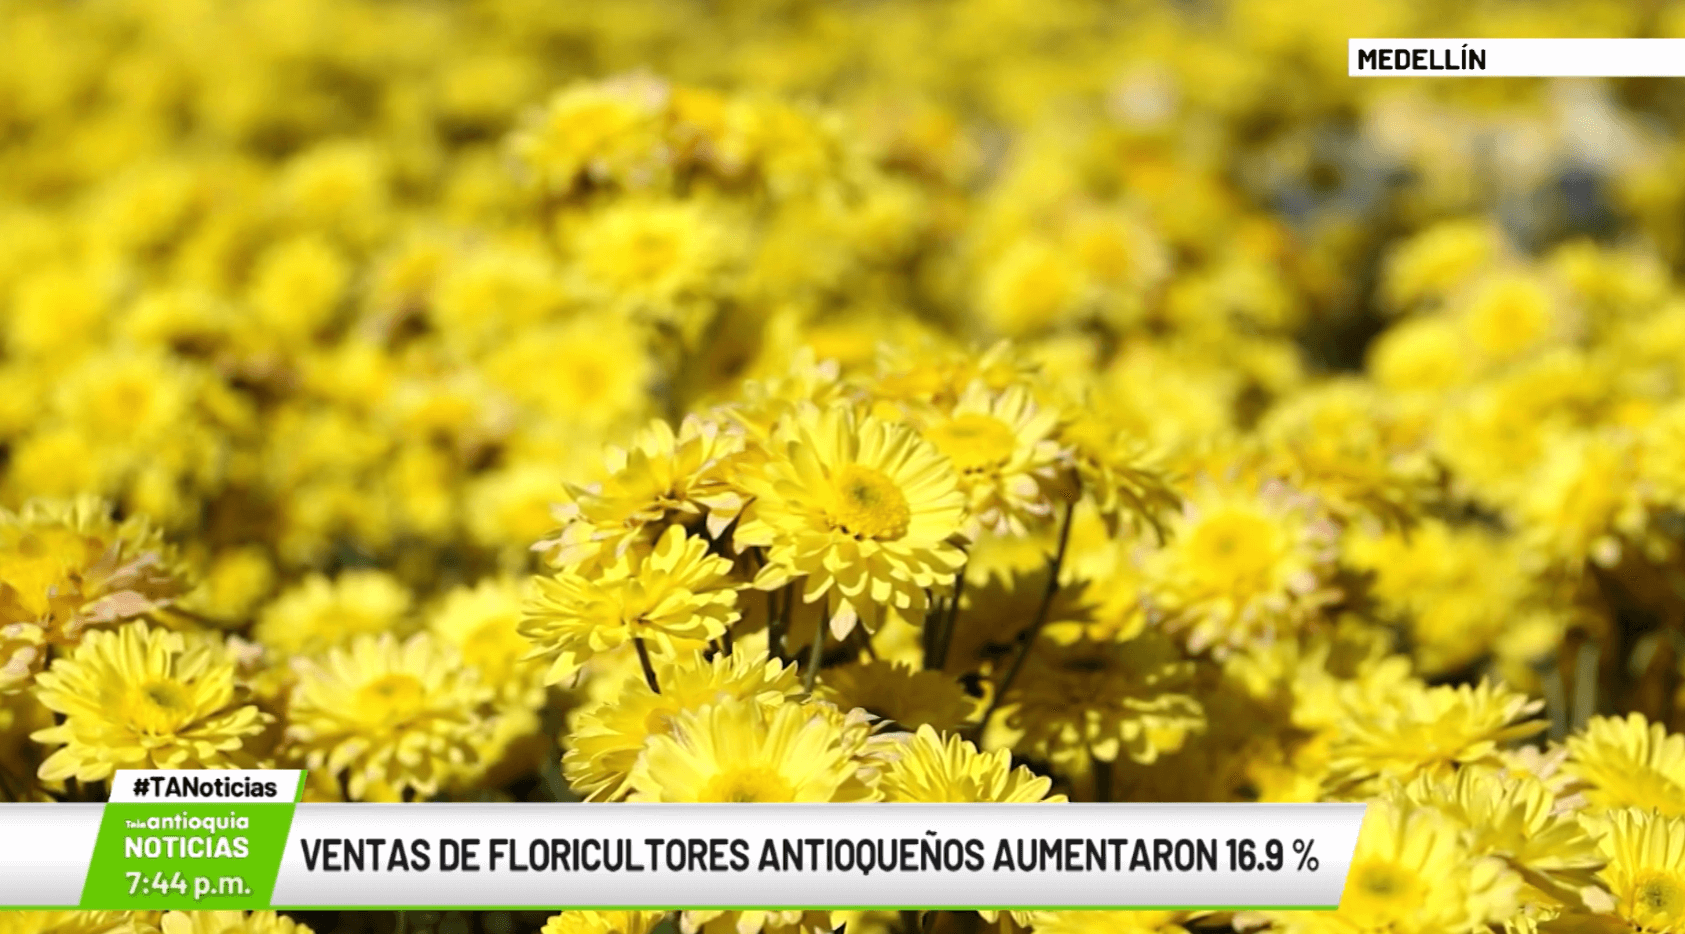 Ventas de floricultores antioqueños aumentaron 16.9 %